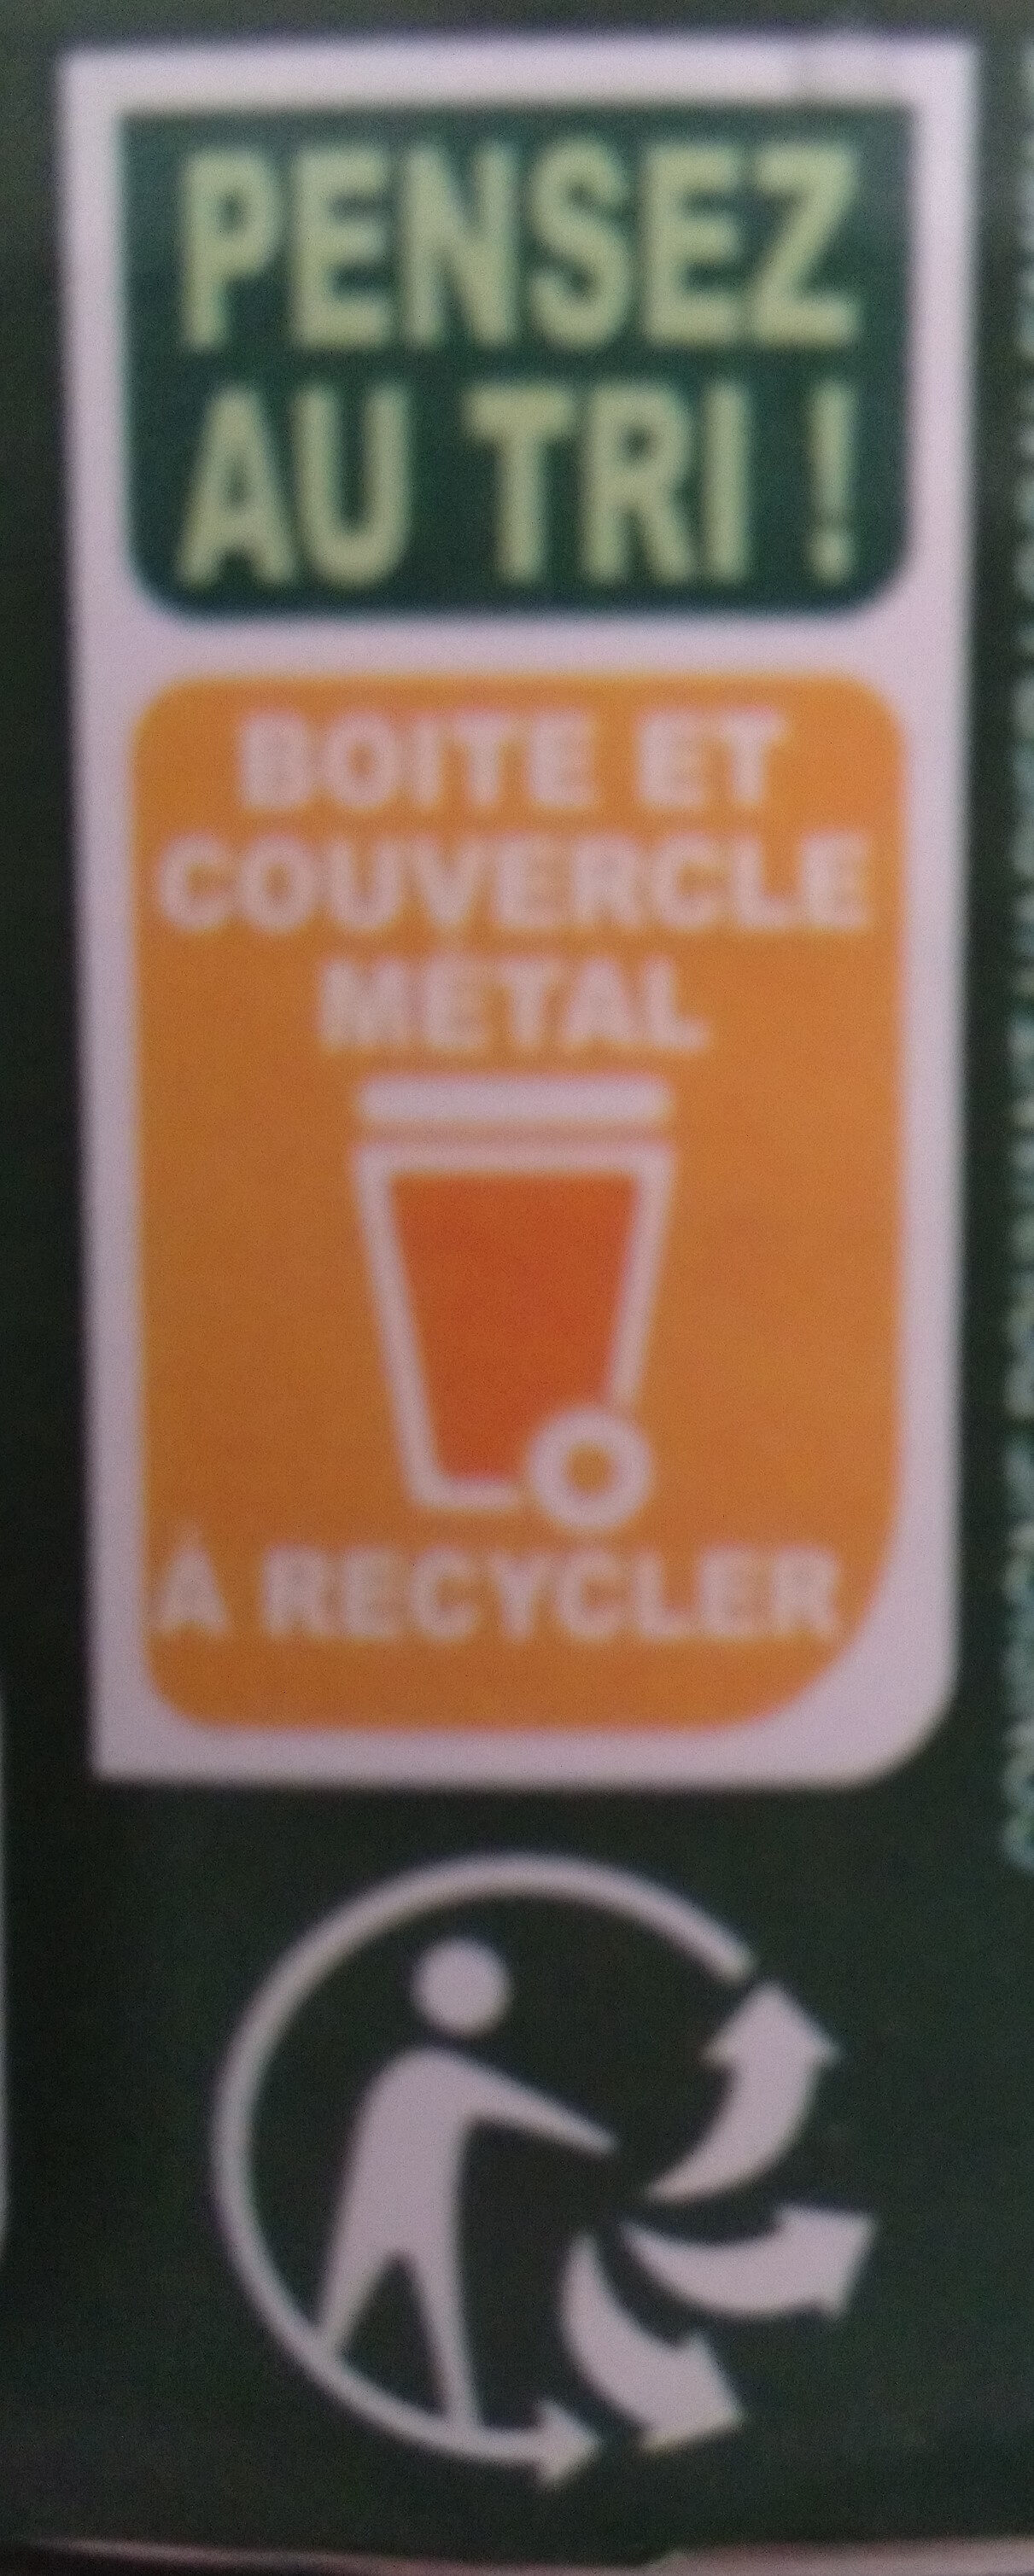 Choucroute william saurin - Instruction de recyclage et/ou informations d'emballage